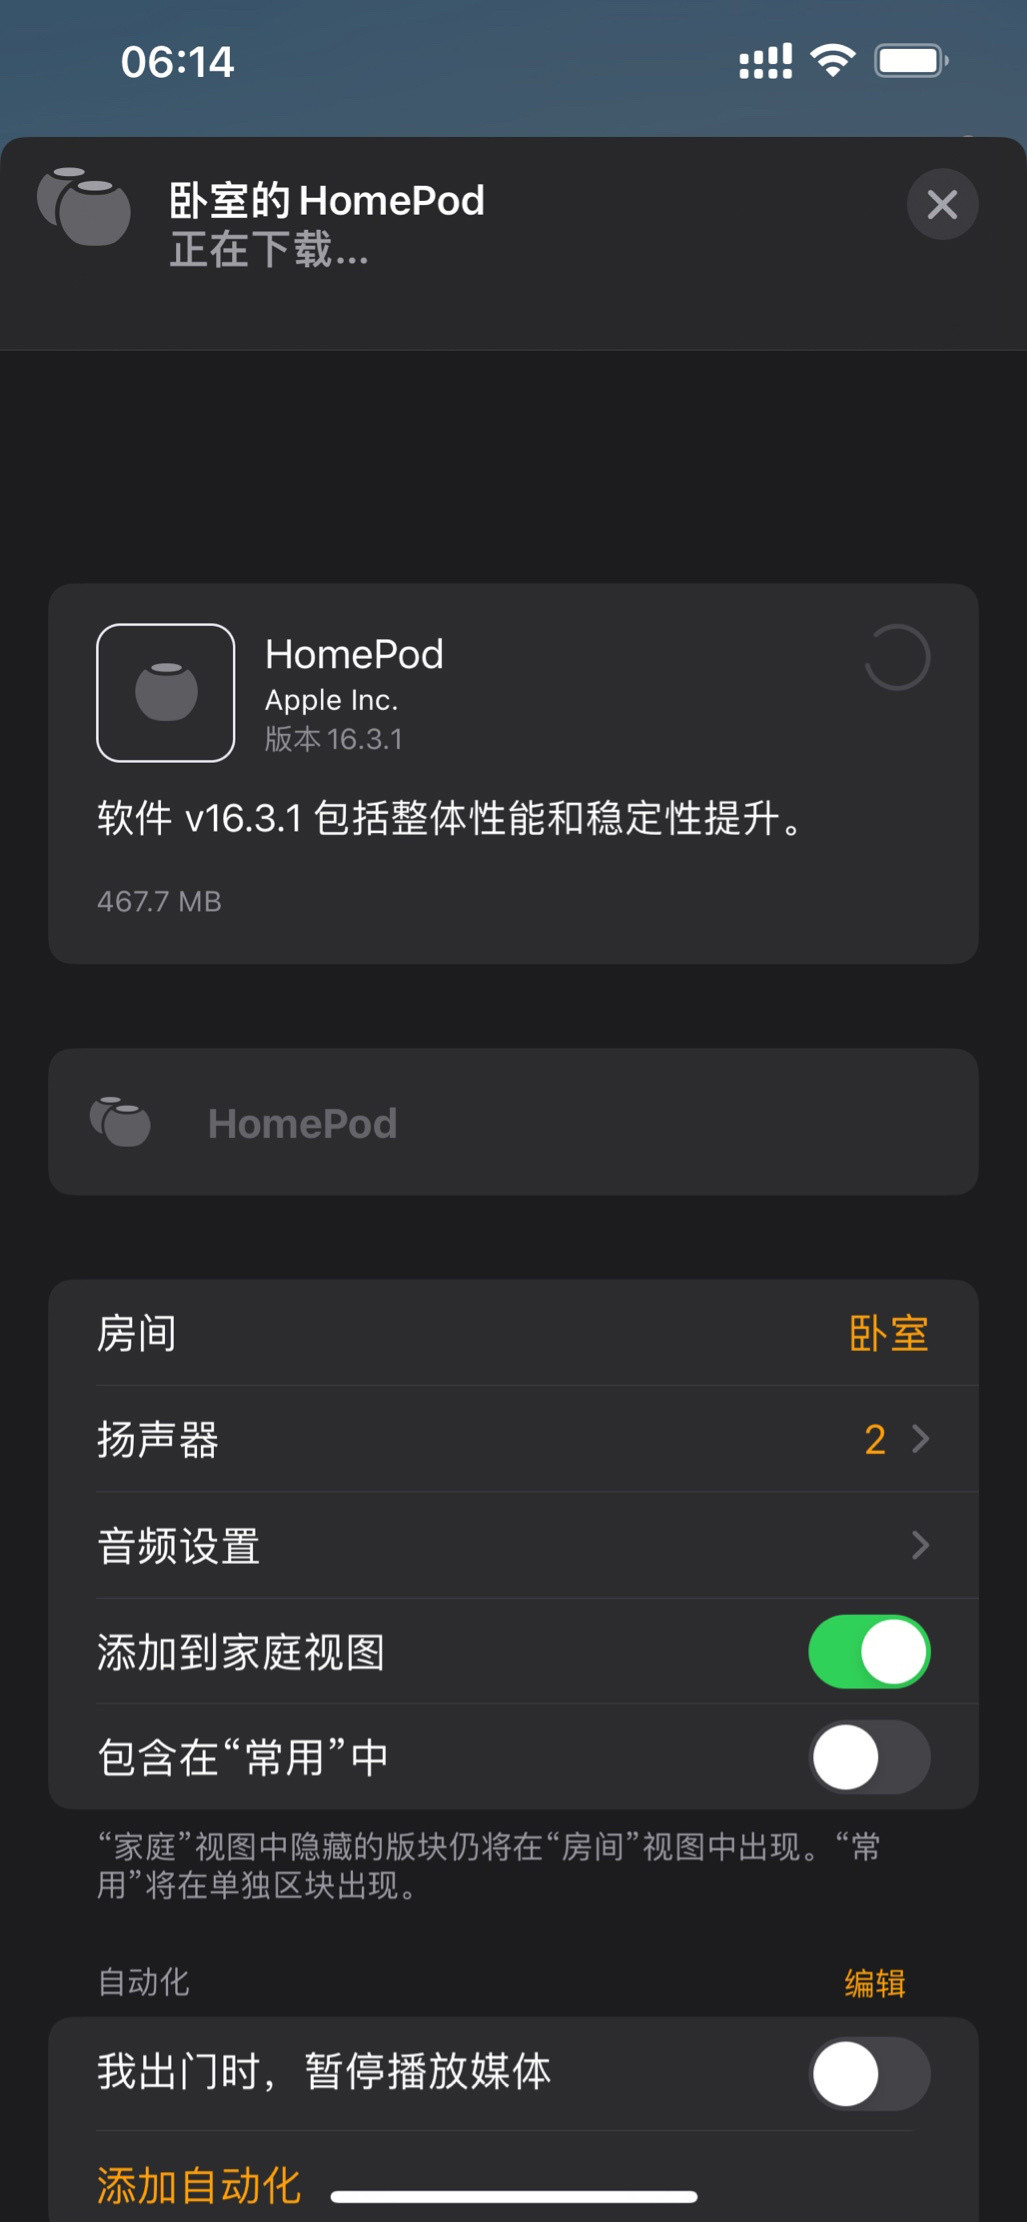 ƻ tvOS 16.3.1  HomePod 16.3